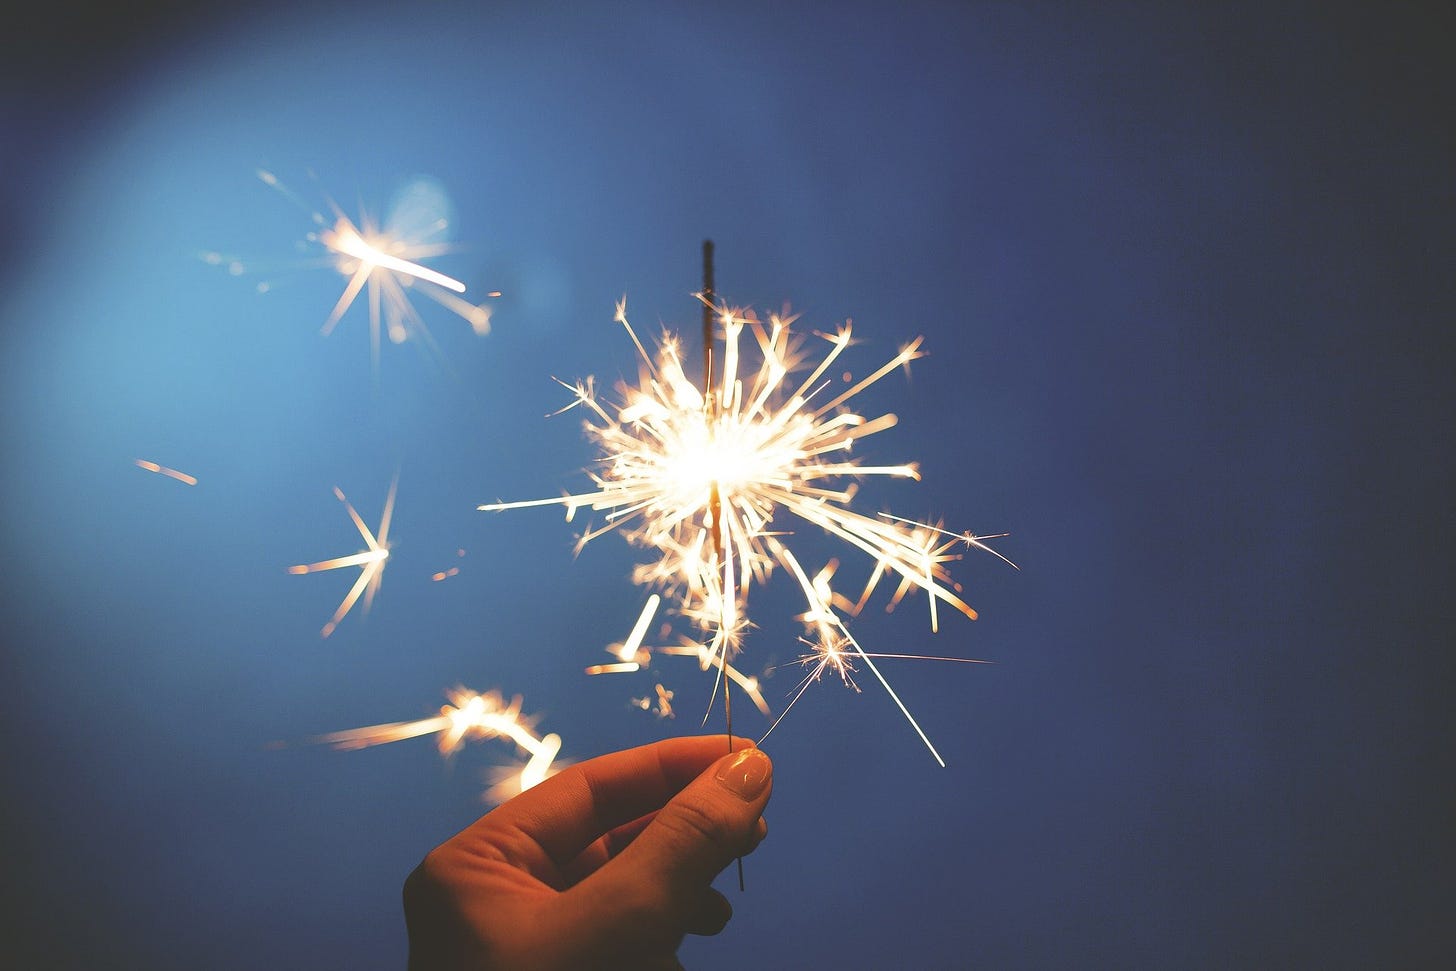 A sparkler : a hand held firework representing celebrations